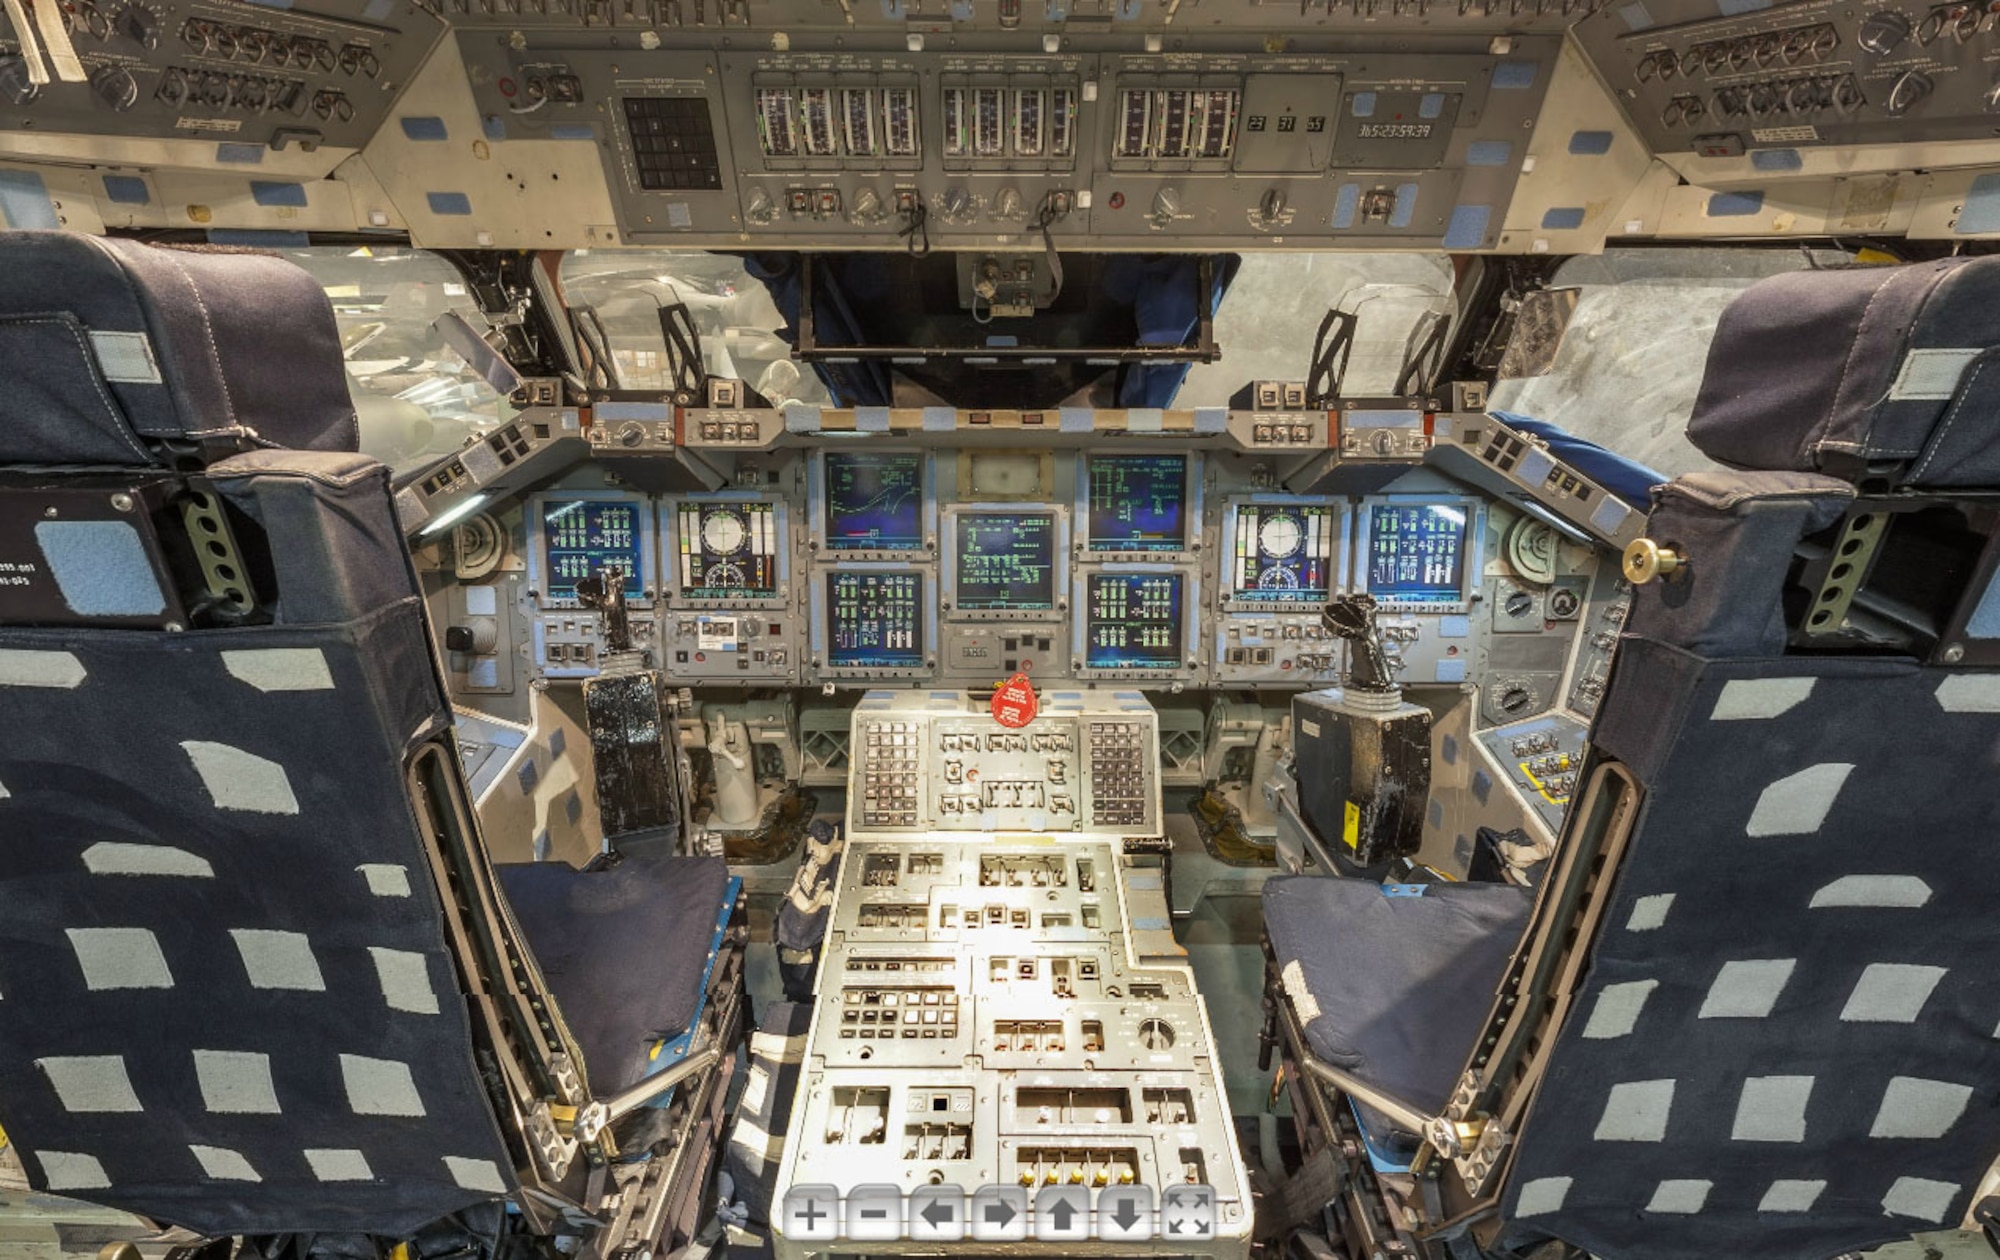 nasa space shuttle virtual tour